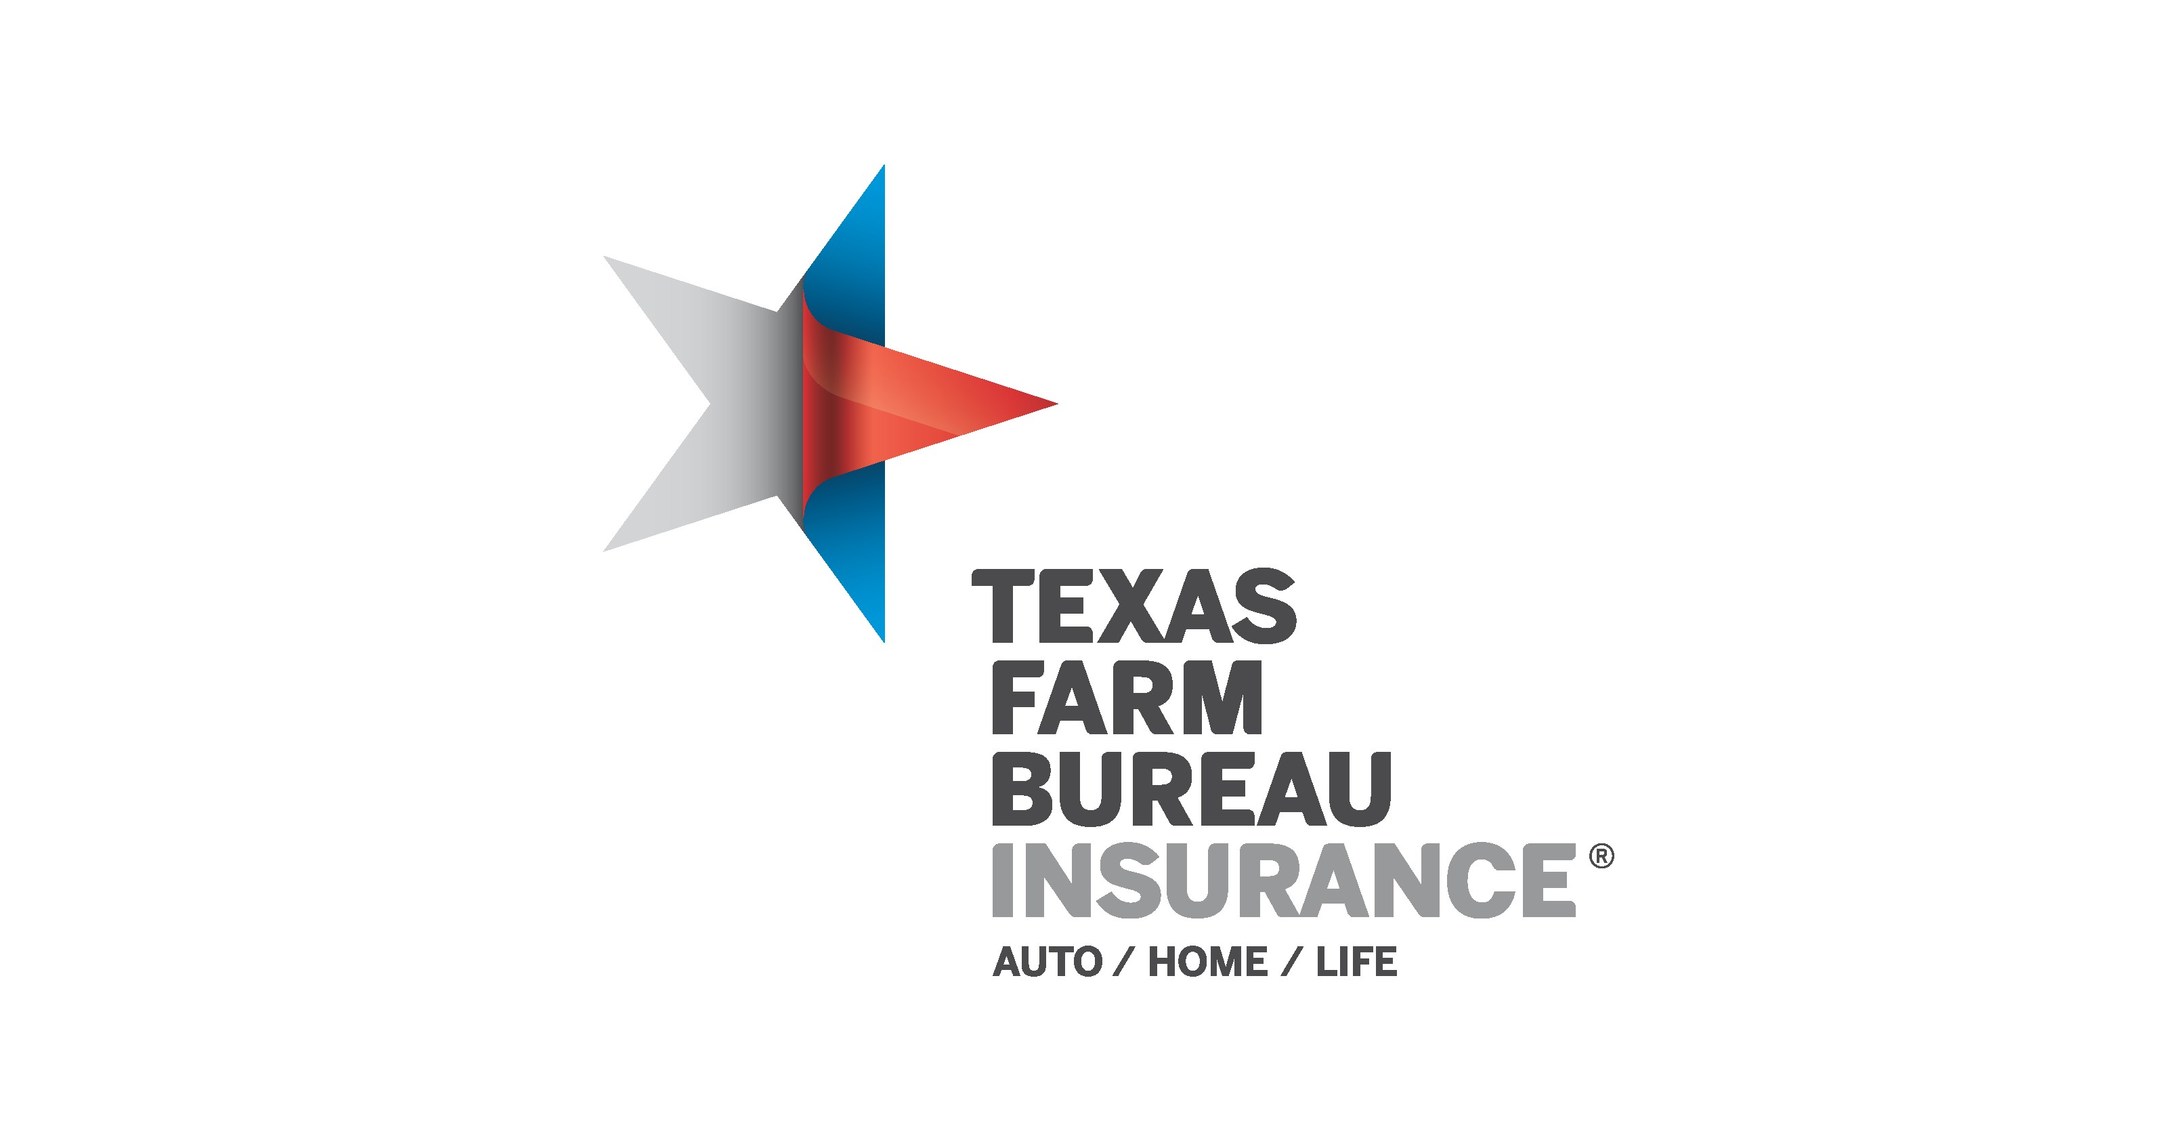 Texas Farm Bureau Insurance providing more than 20